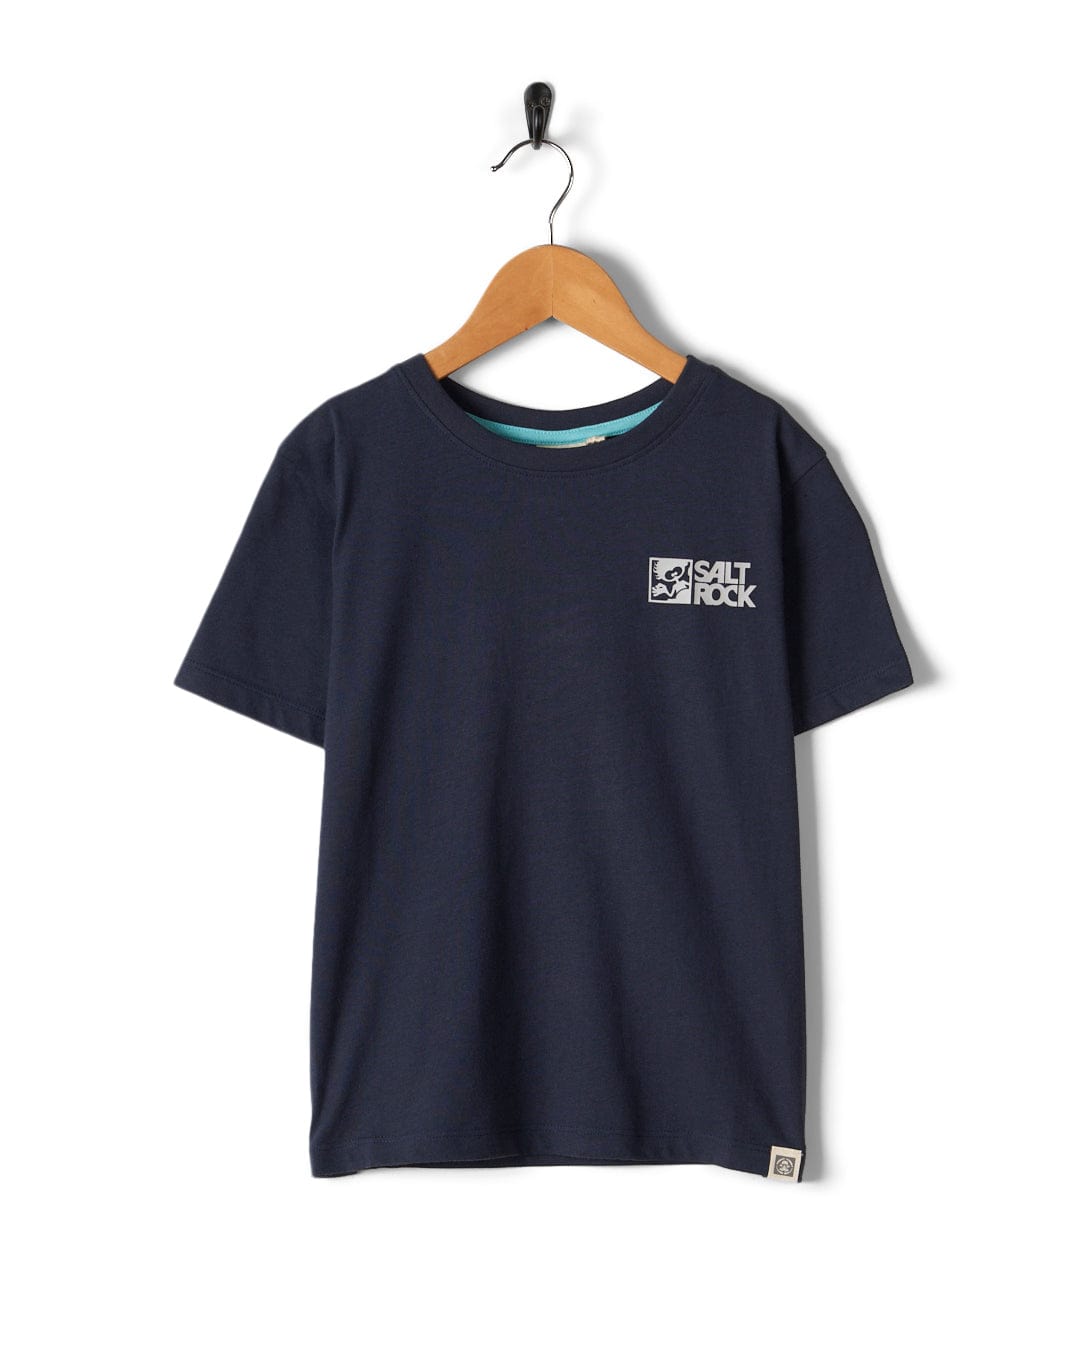 A dark blue Tok Corp Kids Short Sleeve T-Shirt with a white Saltrock branding logo on it.